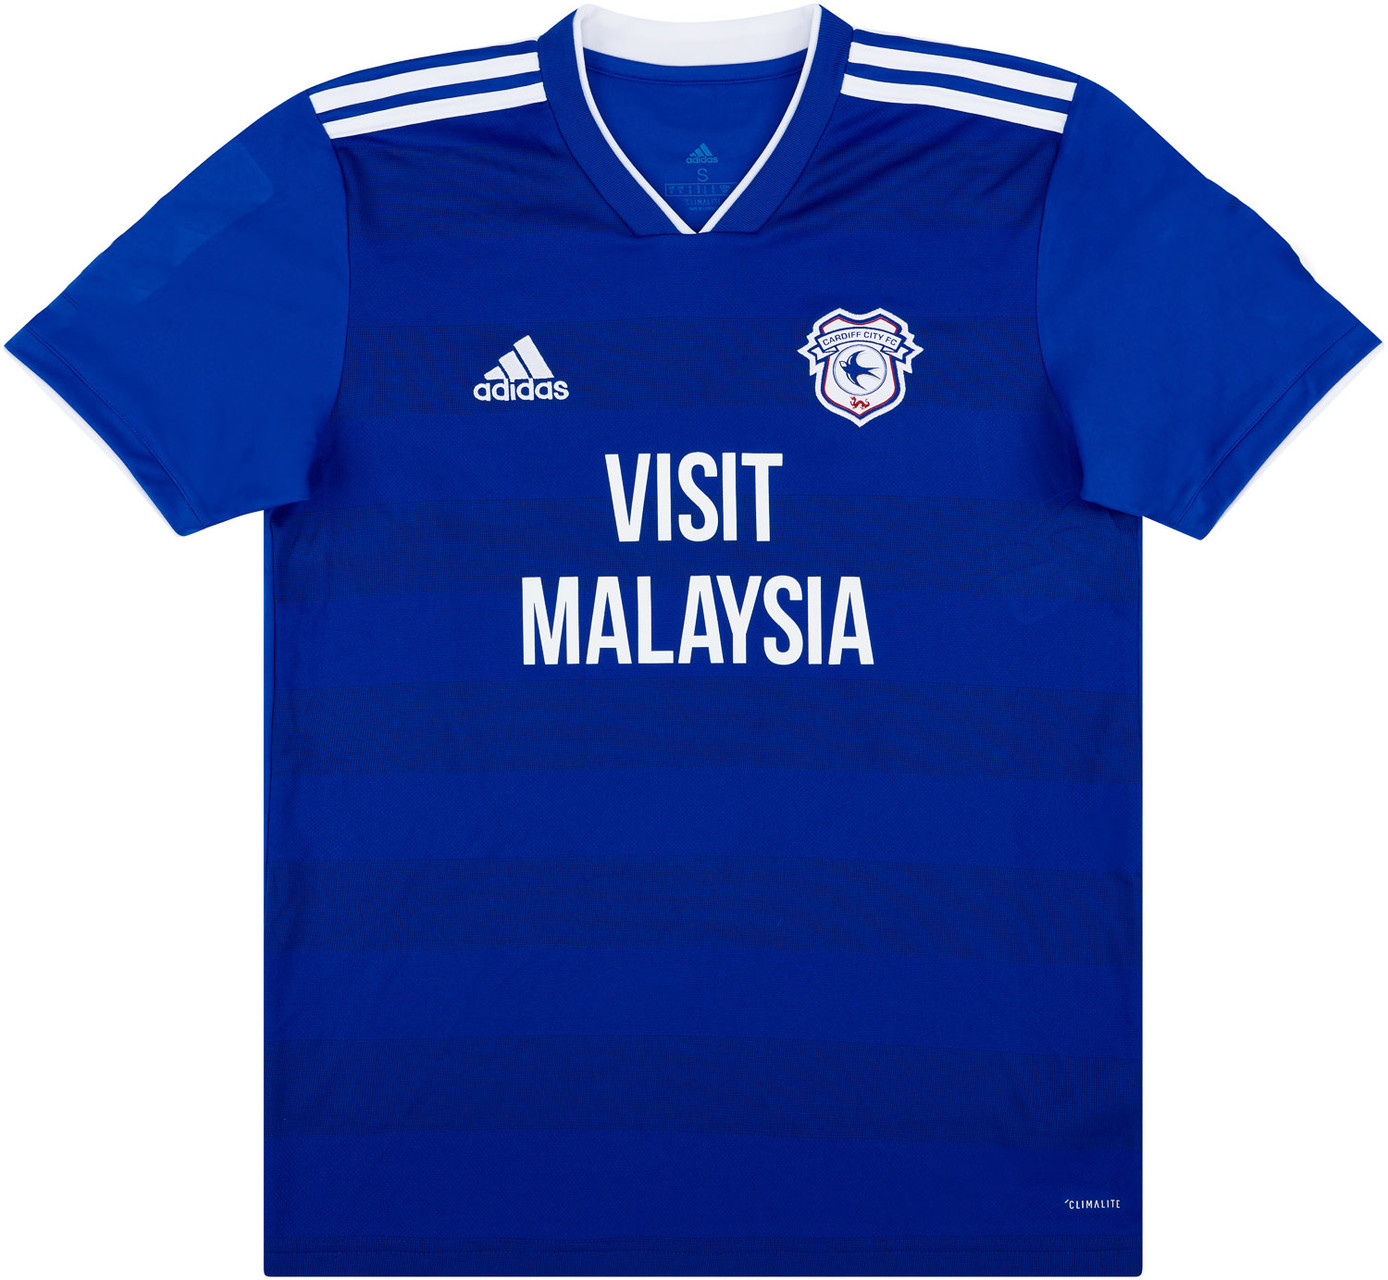 2018/19 Cardiff City Away Football Shirt / Old Adidas Soccer